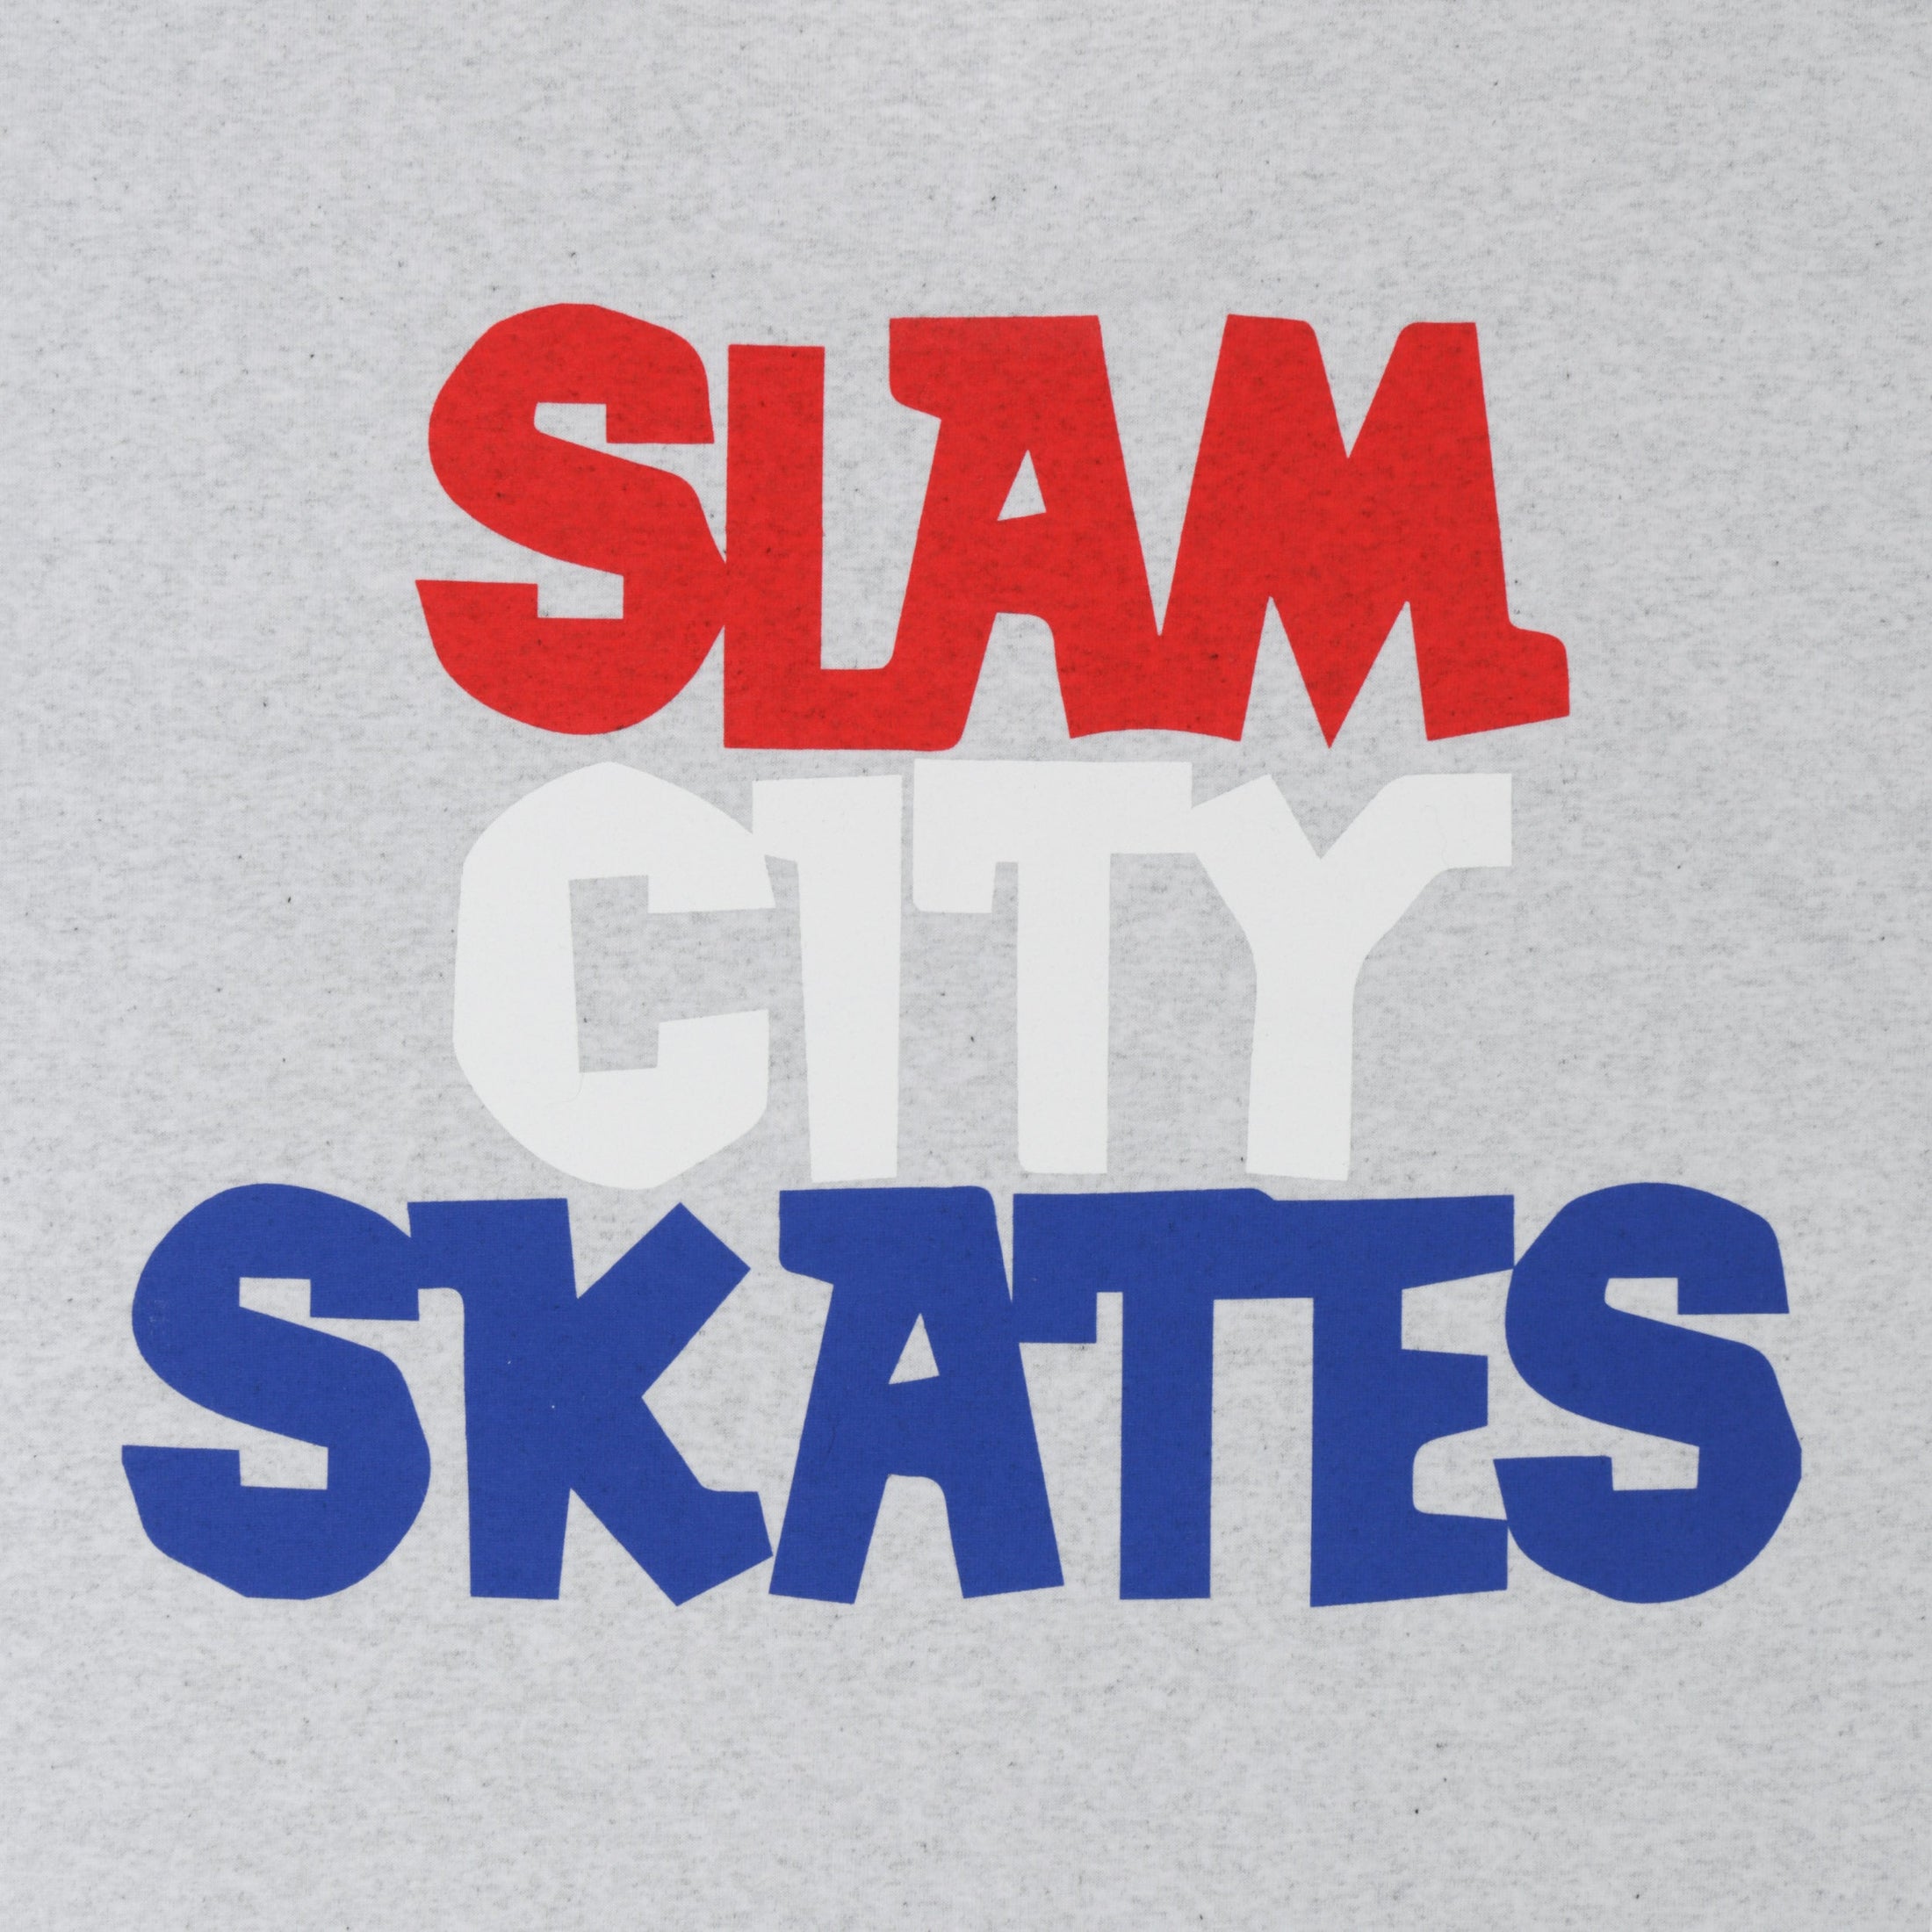 Slam City Skates Classic Scale Logo T-Shirt Ash Heather